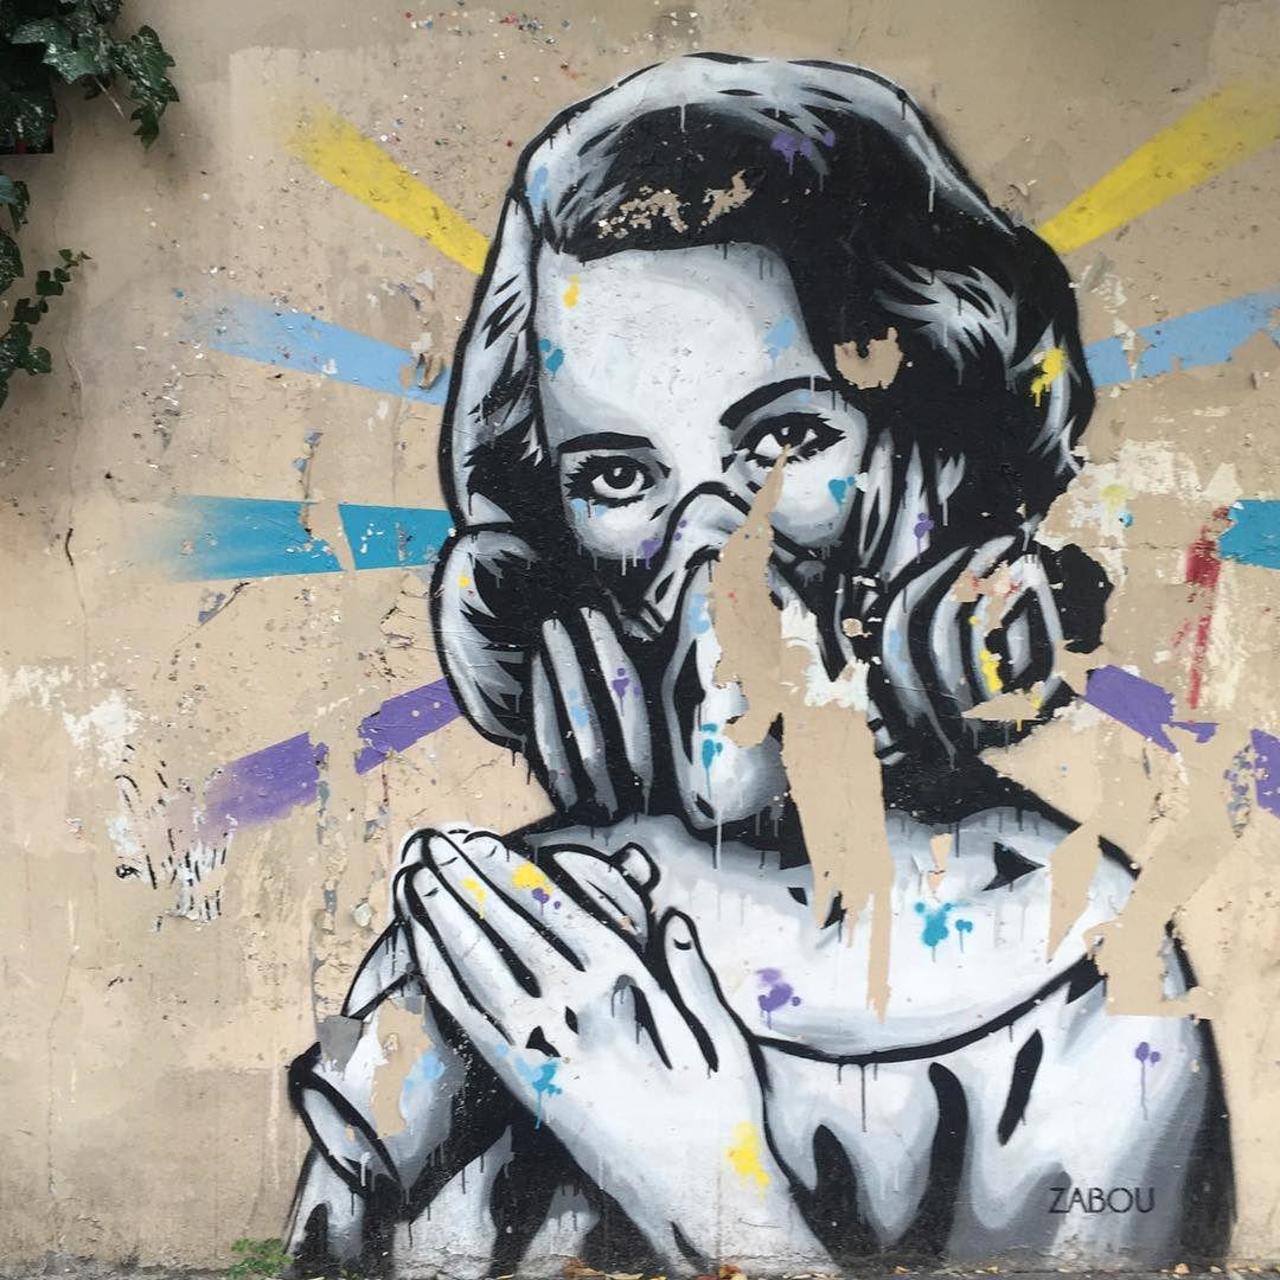 #Paris #graffiti photo by @catscoffeecreativity http://ift.tt/1VVpw3v #StreetArt http://t.co/fnN6Q8BZWS